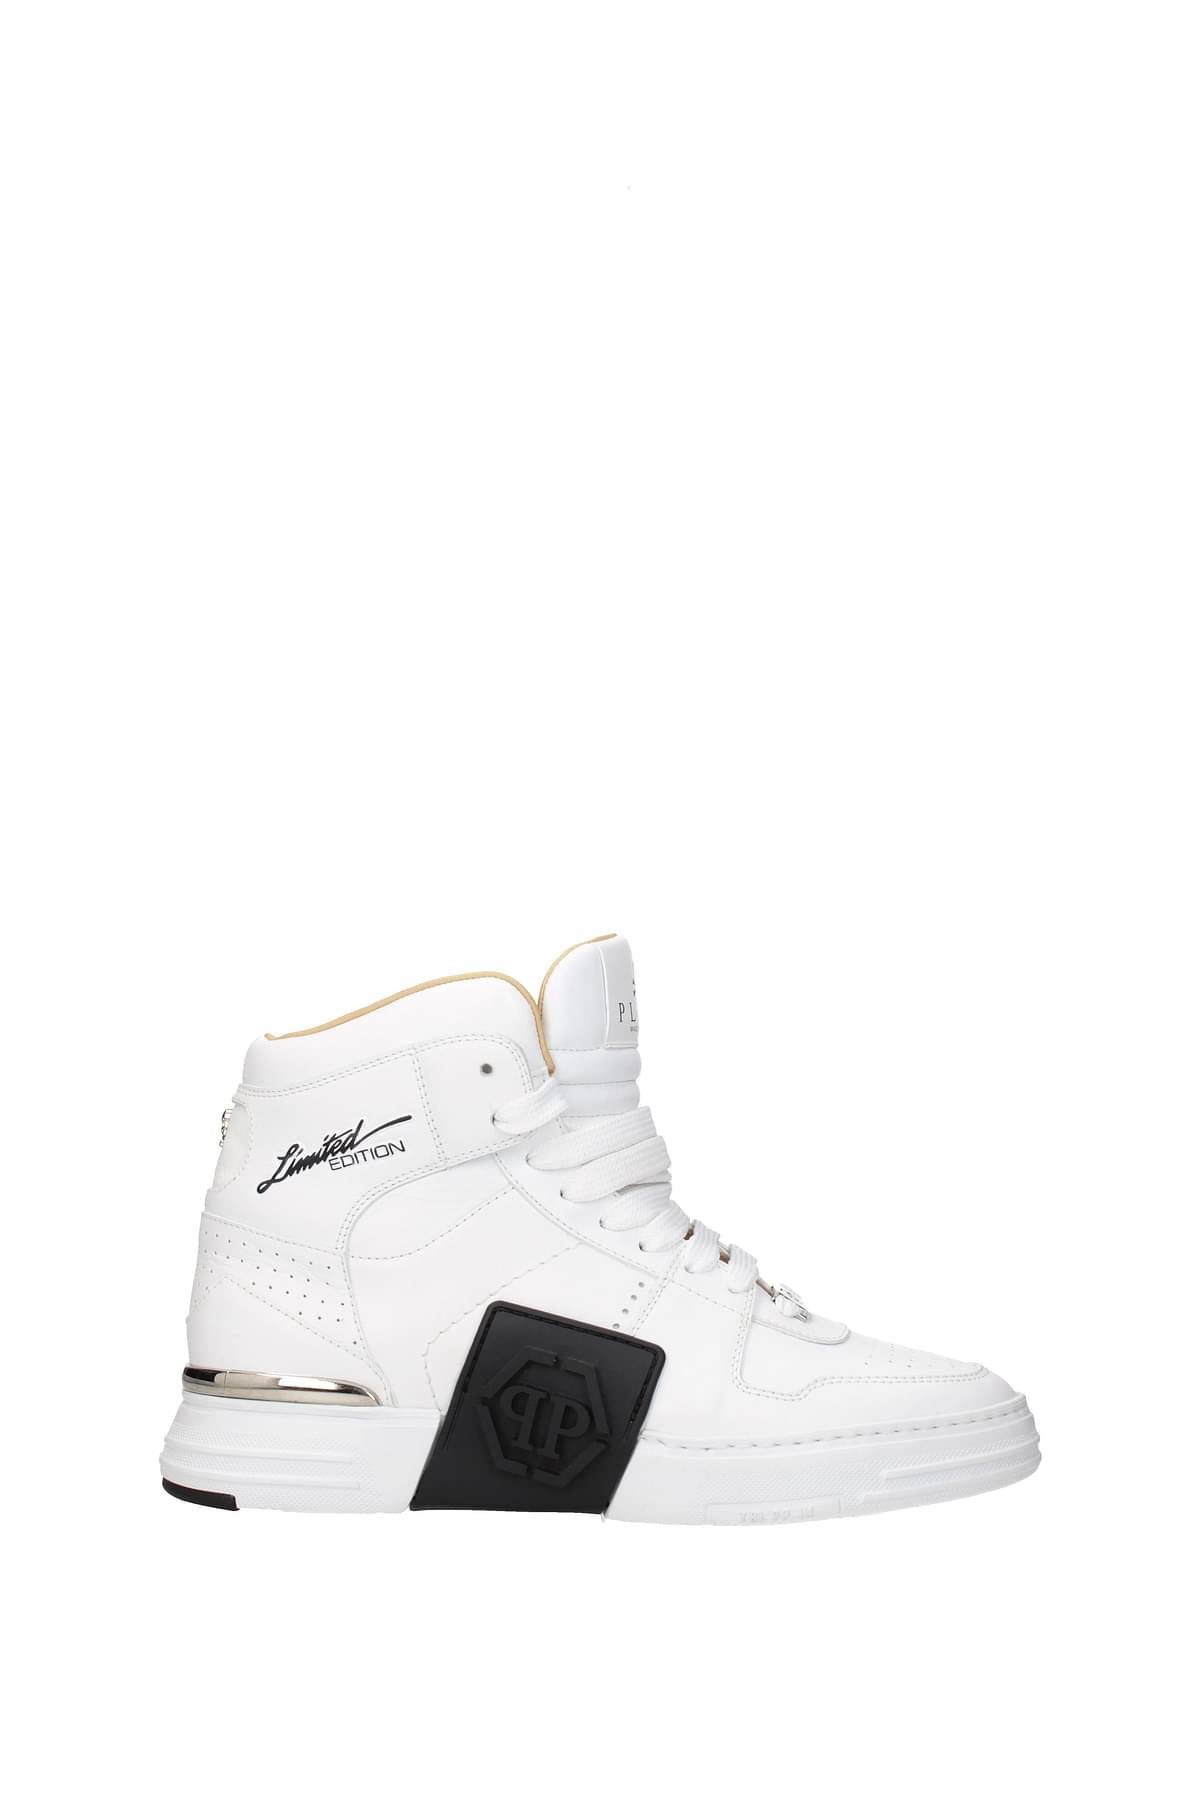 Philipp Plein Sneakers limited edition Men MSC3374PLE075N01 Leather White  351,75€